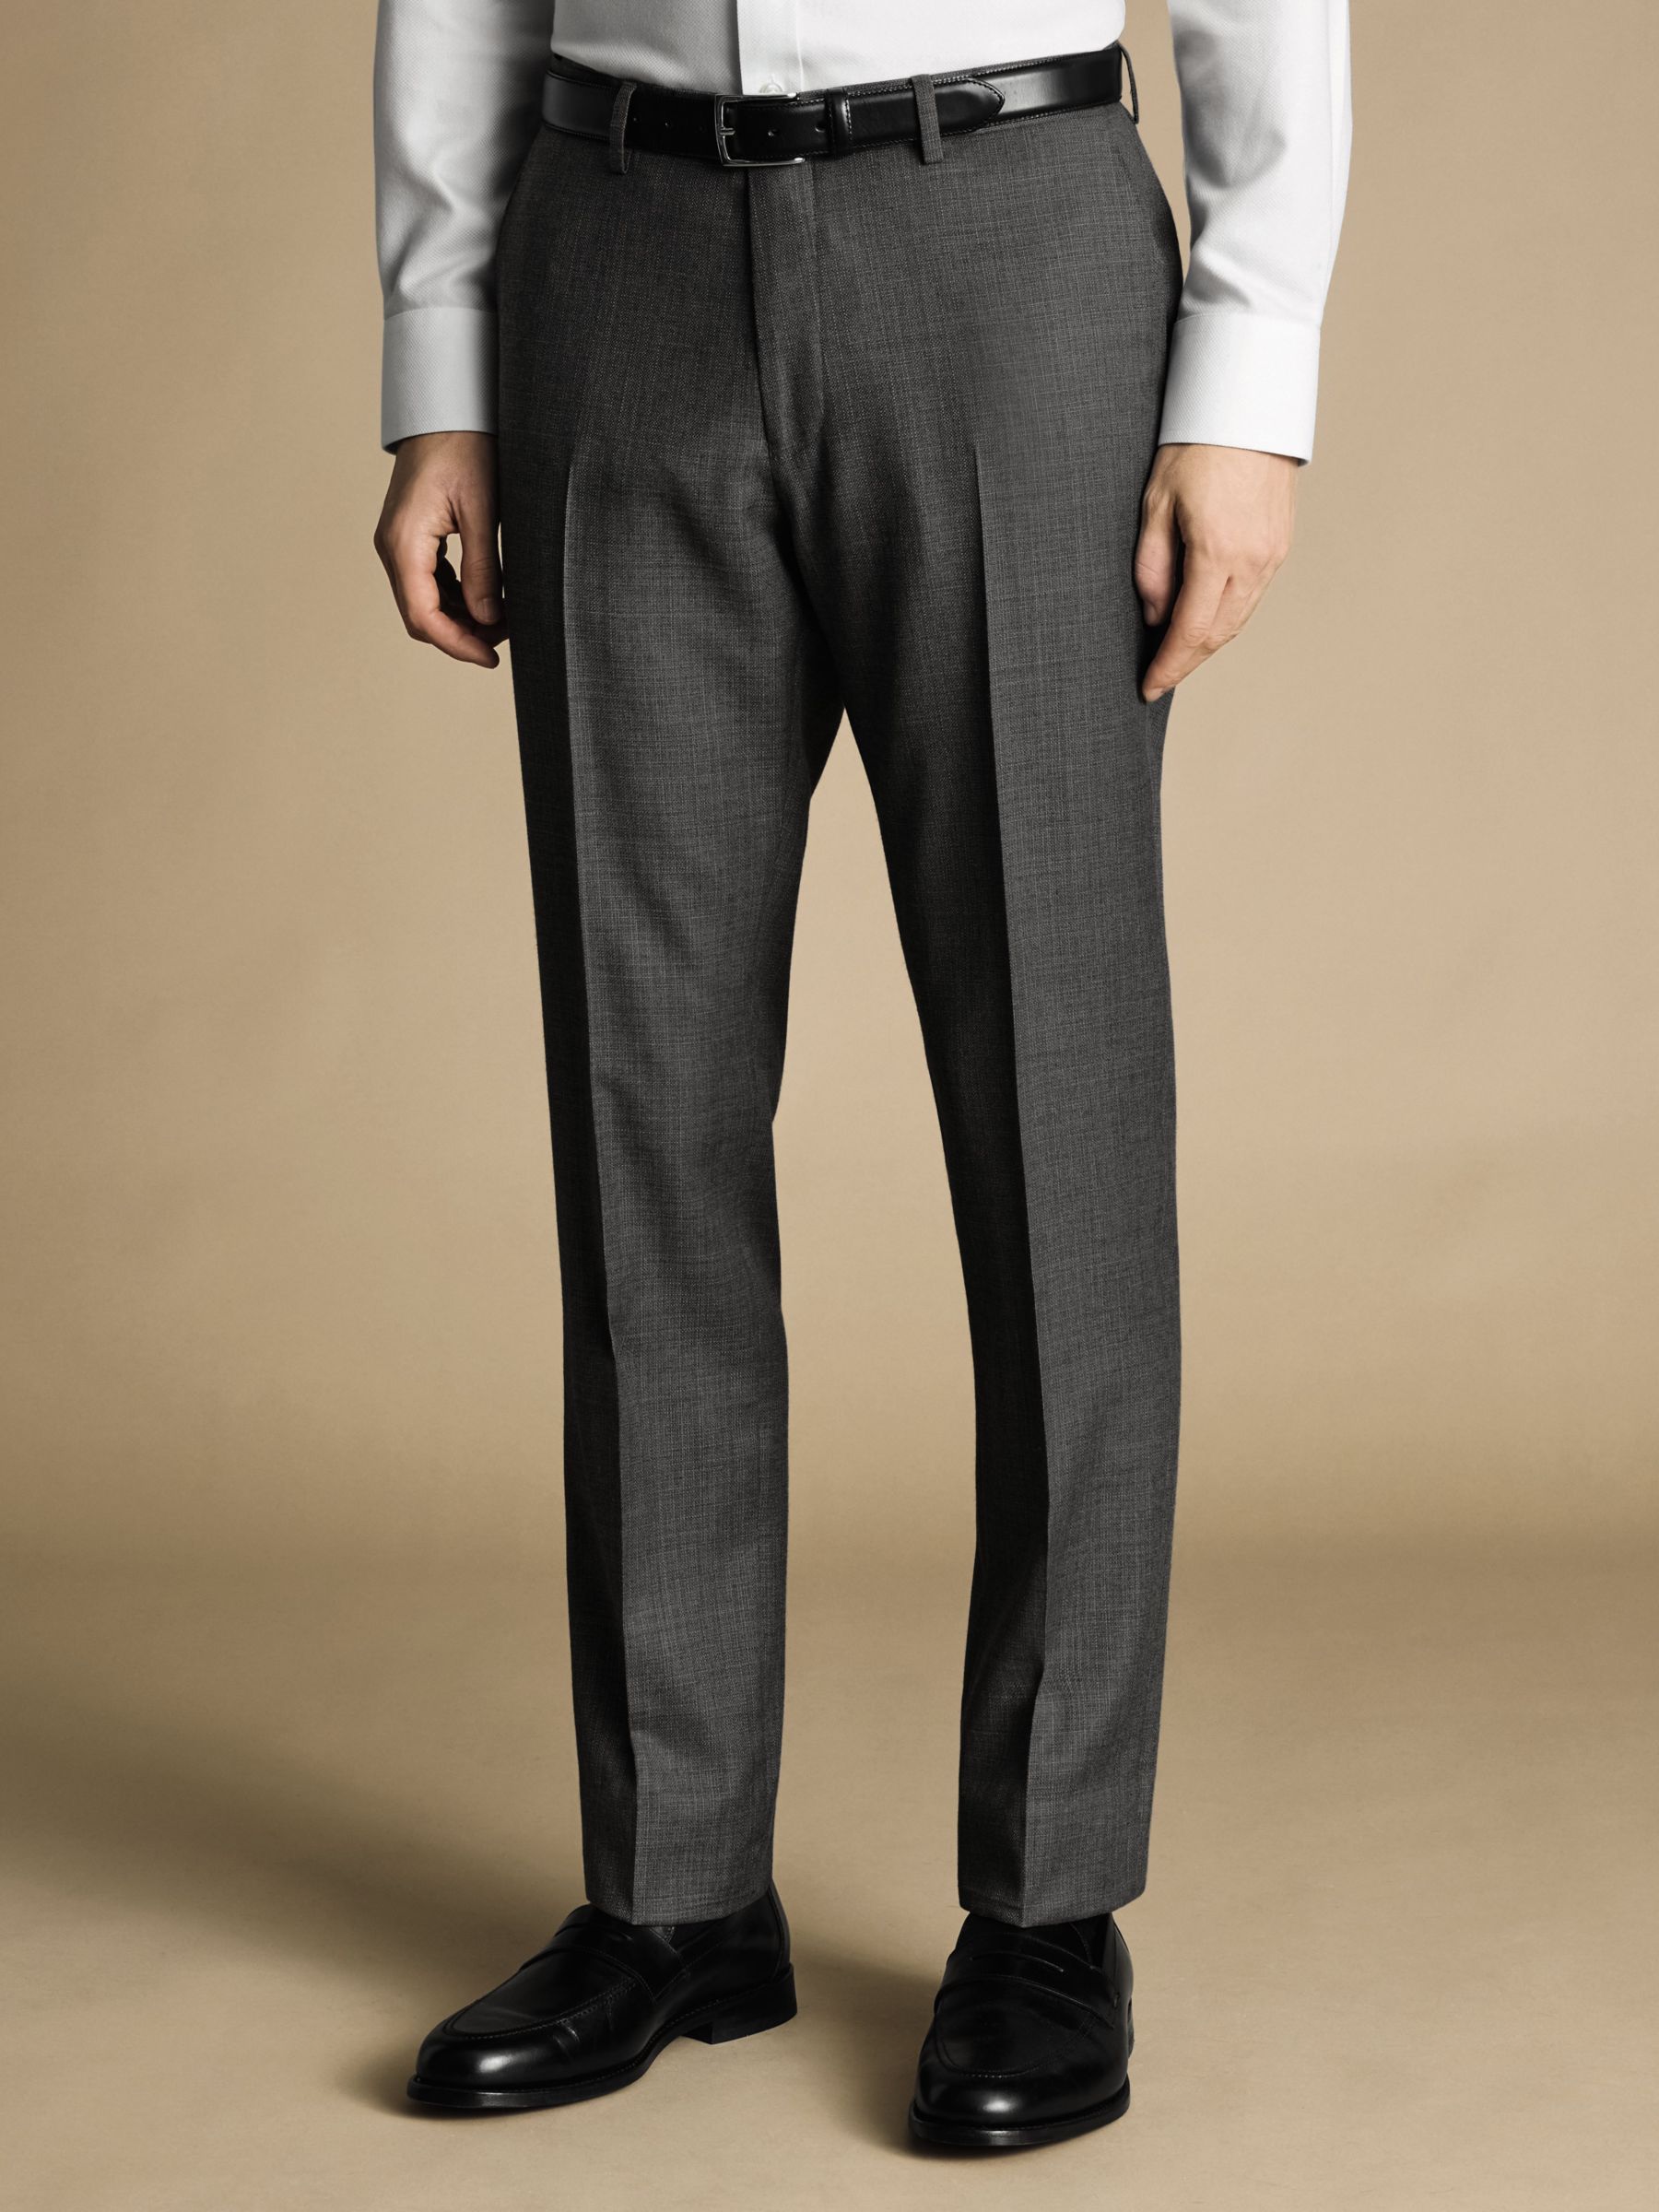 Buy Charles Tyrwhitt Slim Fit Italian Luxury Suit Trousers Online at johnlewis.com